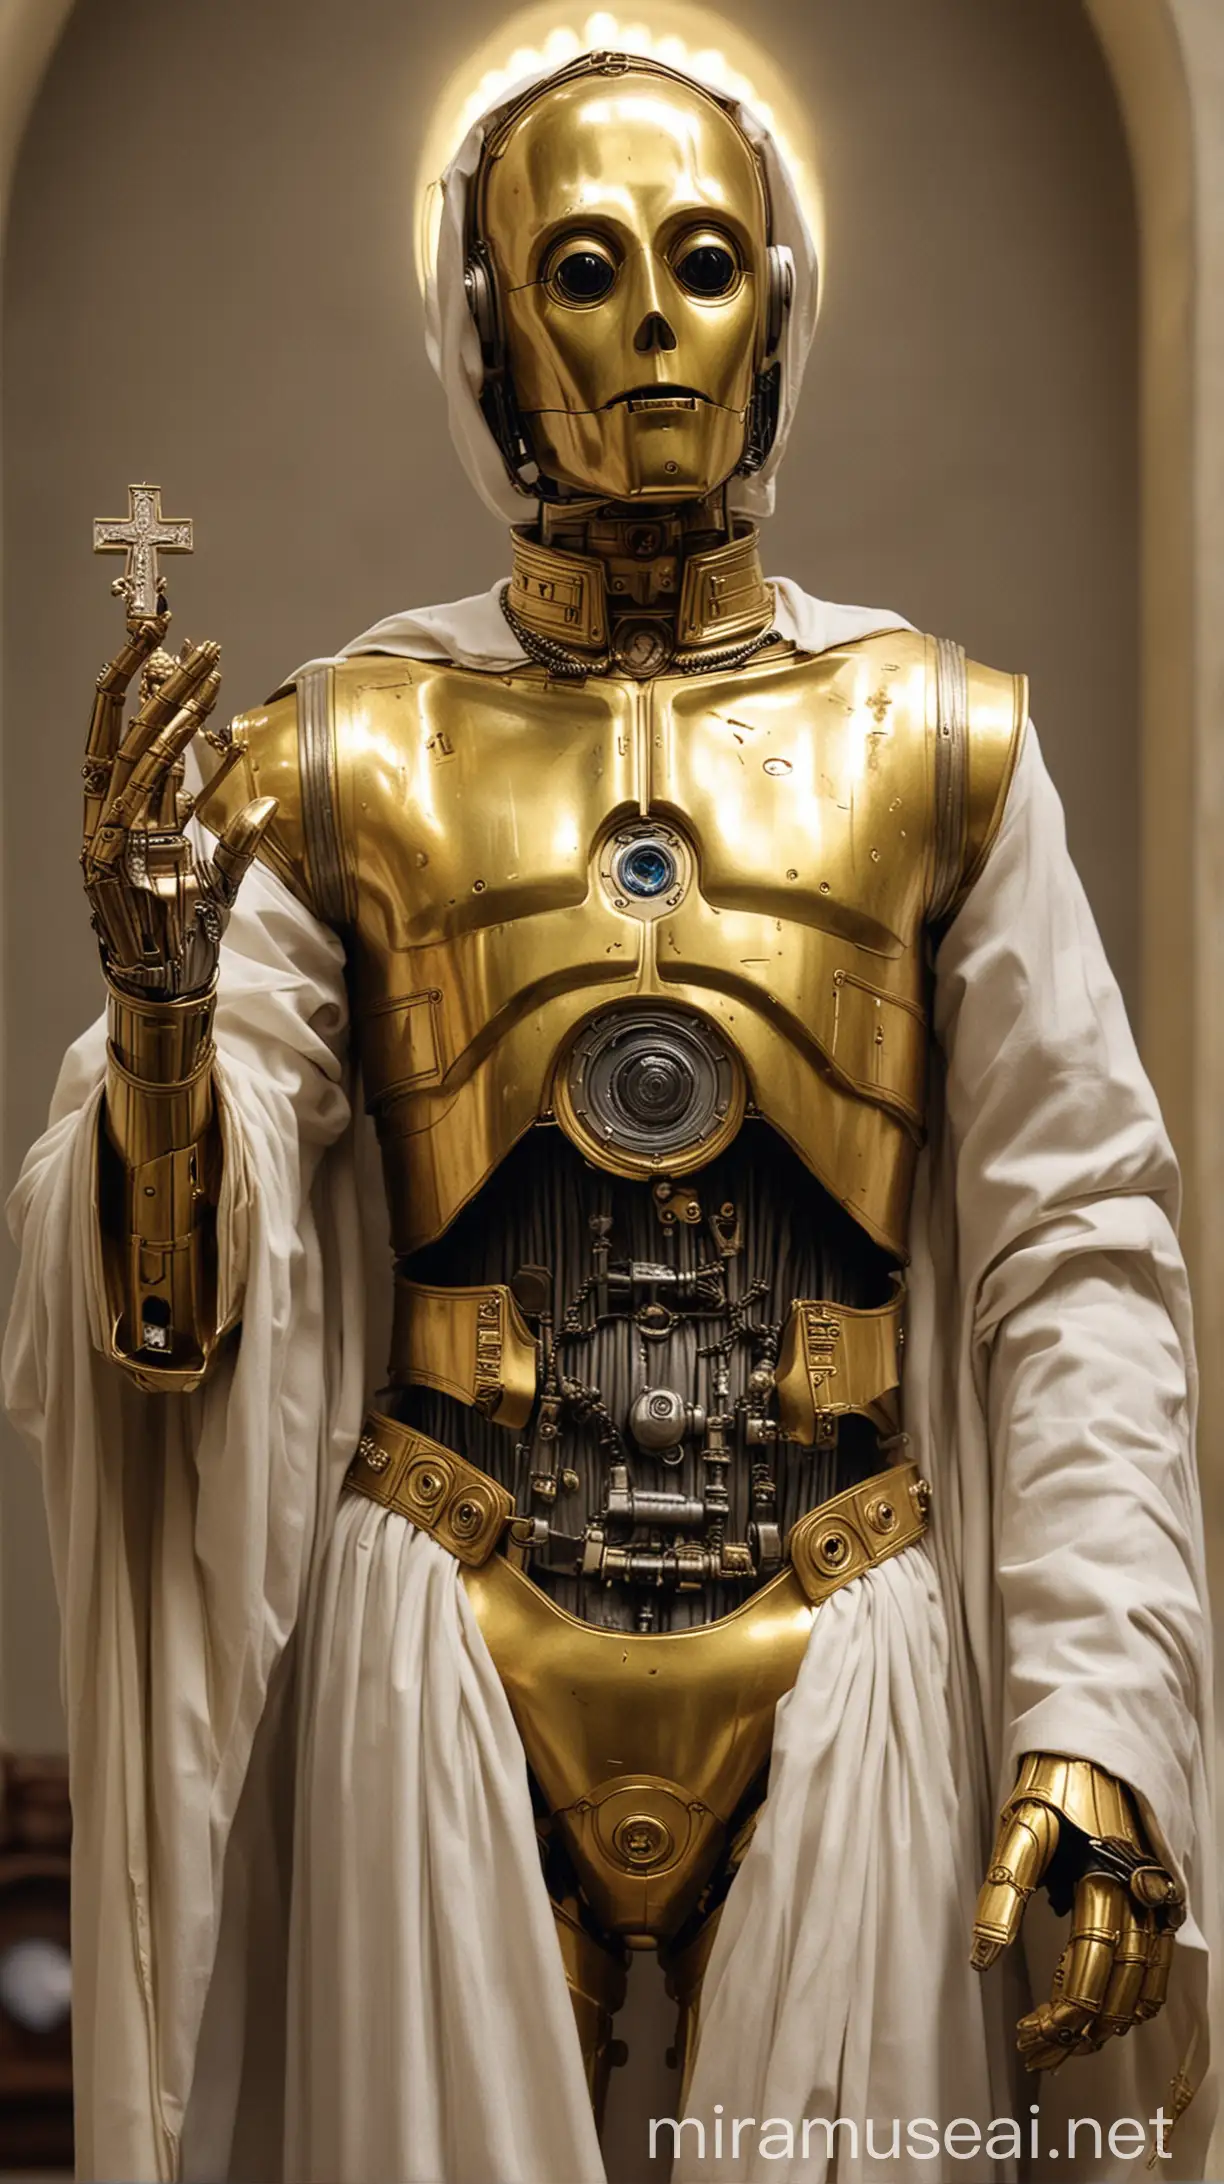 C-3PO as a Catholic saint.